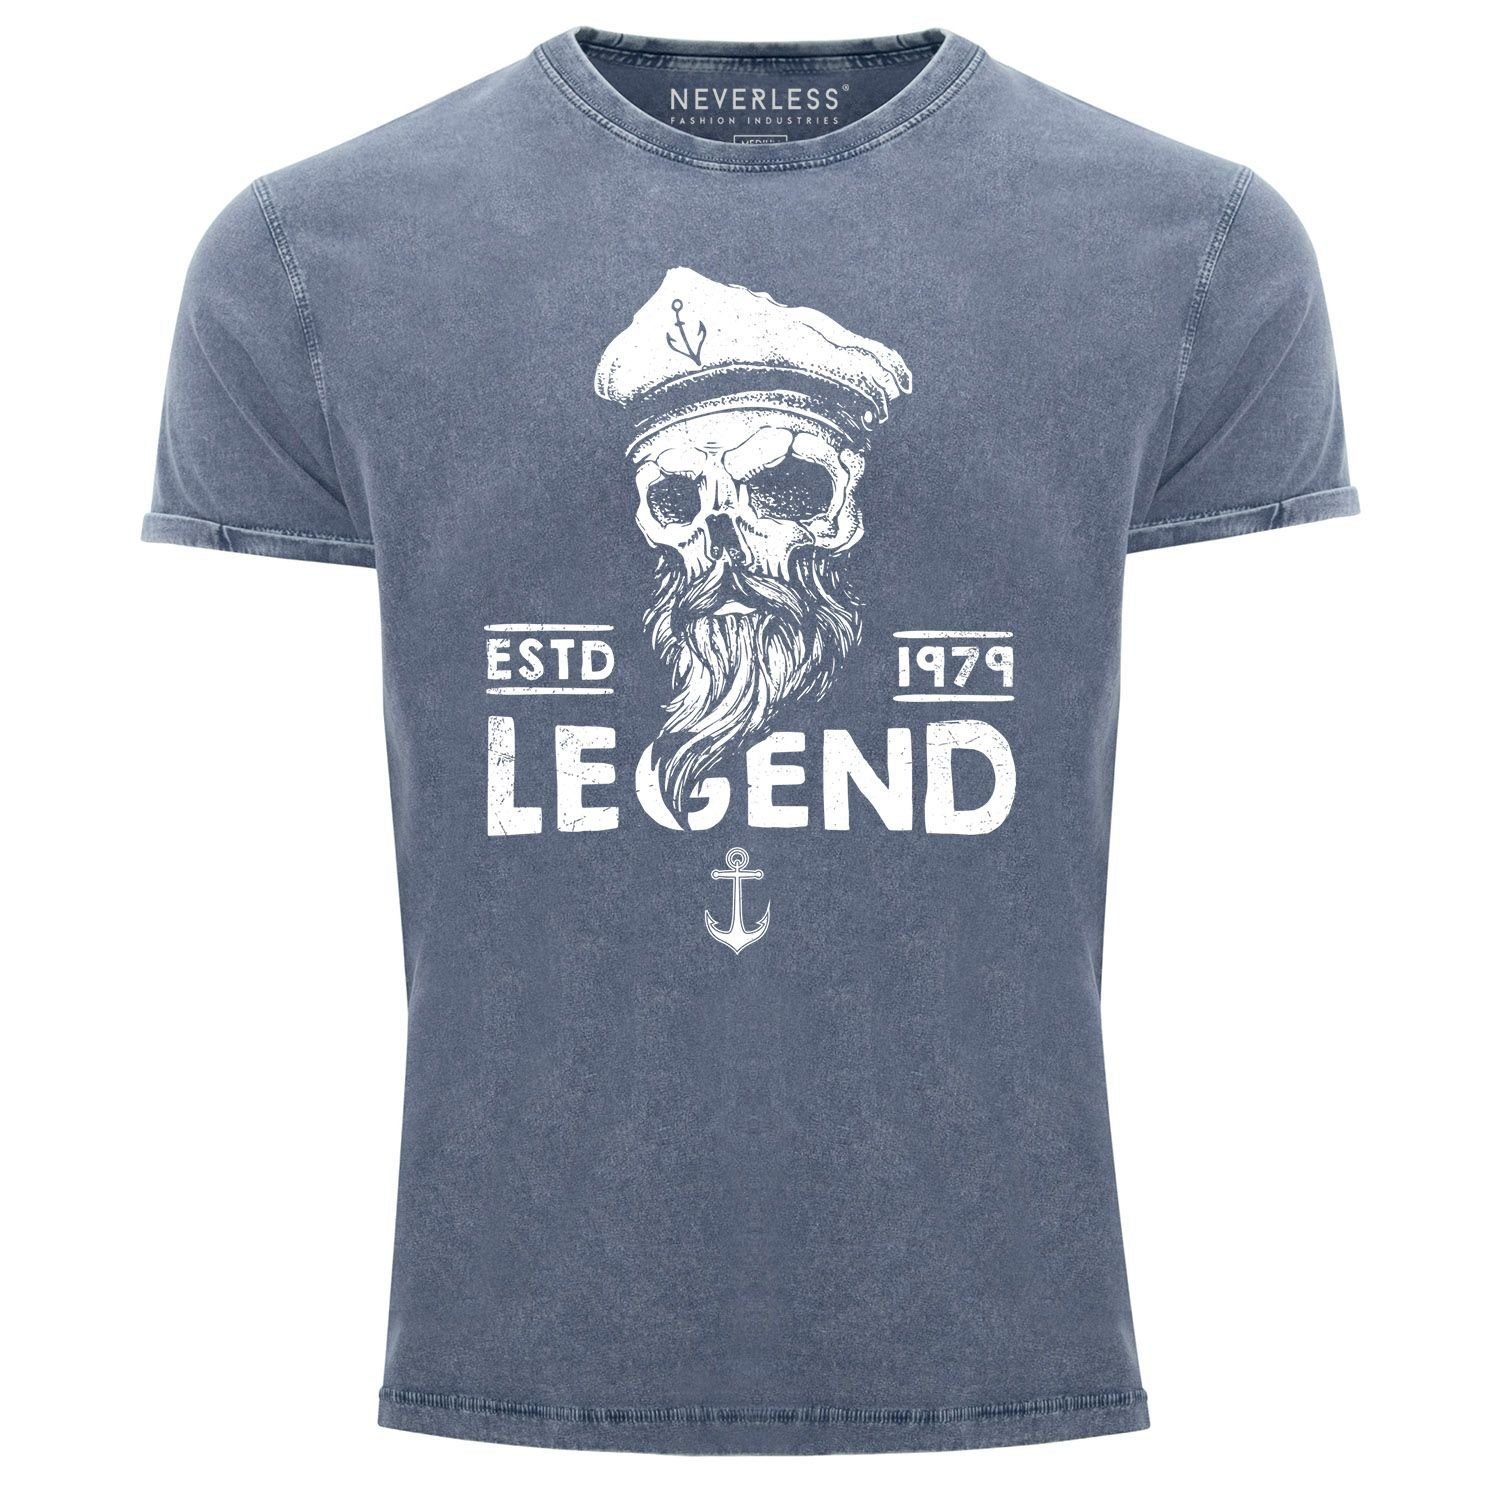 Used Angesagtes Print-Shirt blau Look Fit Herren Cooles Slim Totenkopf Neverless Print Shirt Captain Vintage Legend mit T-Shirt Neverless® Aufdruck